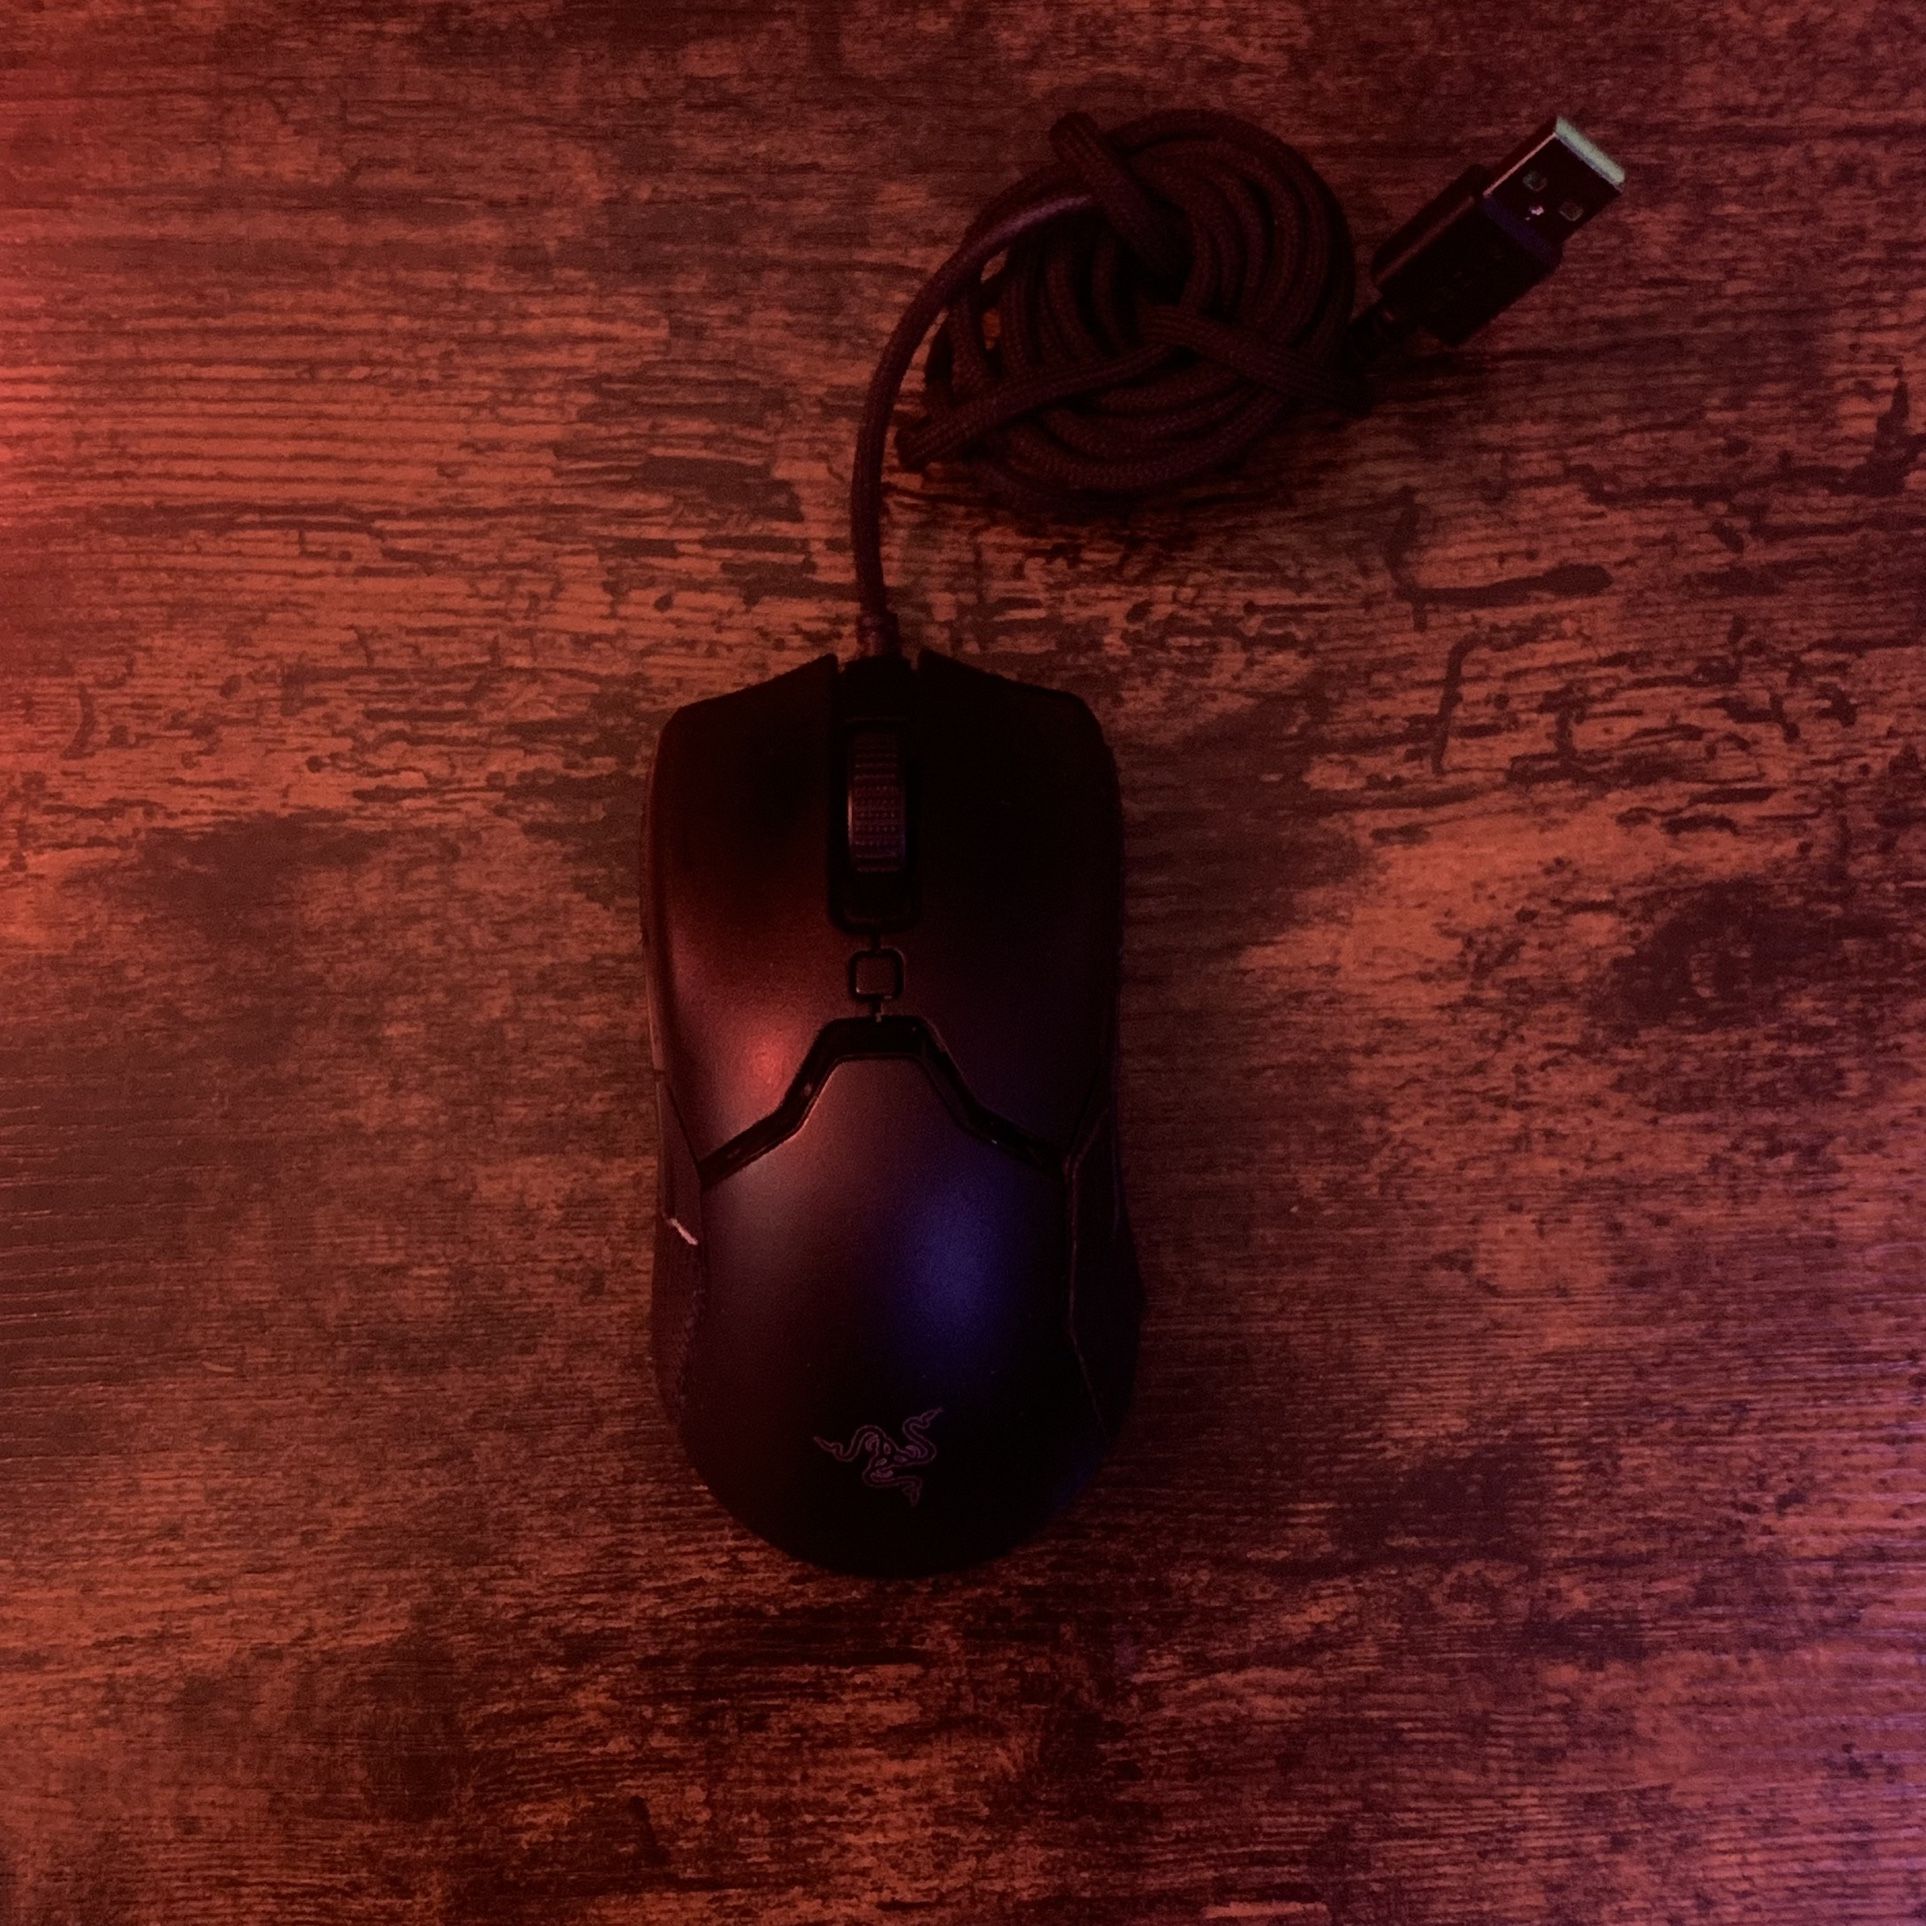 Razer Viper Mini - Wired Gaming Mouse for PC/Mac (Ultralight 61g, Ambidextrous, Speedflex Cable, 8,500 DPI Optical Sensor, Chroma RGB Illumination) Bl